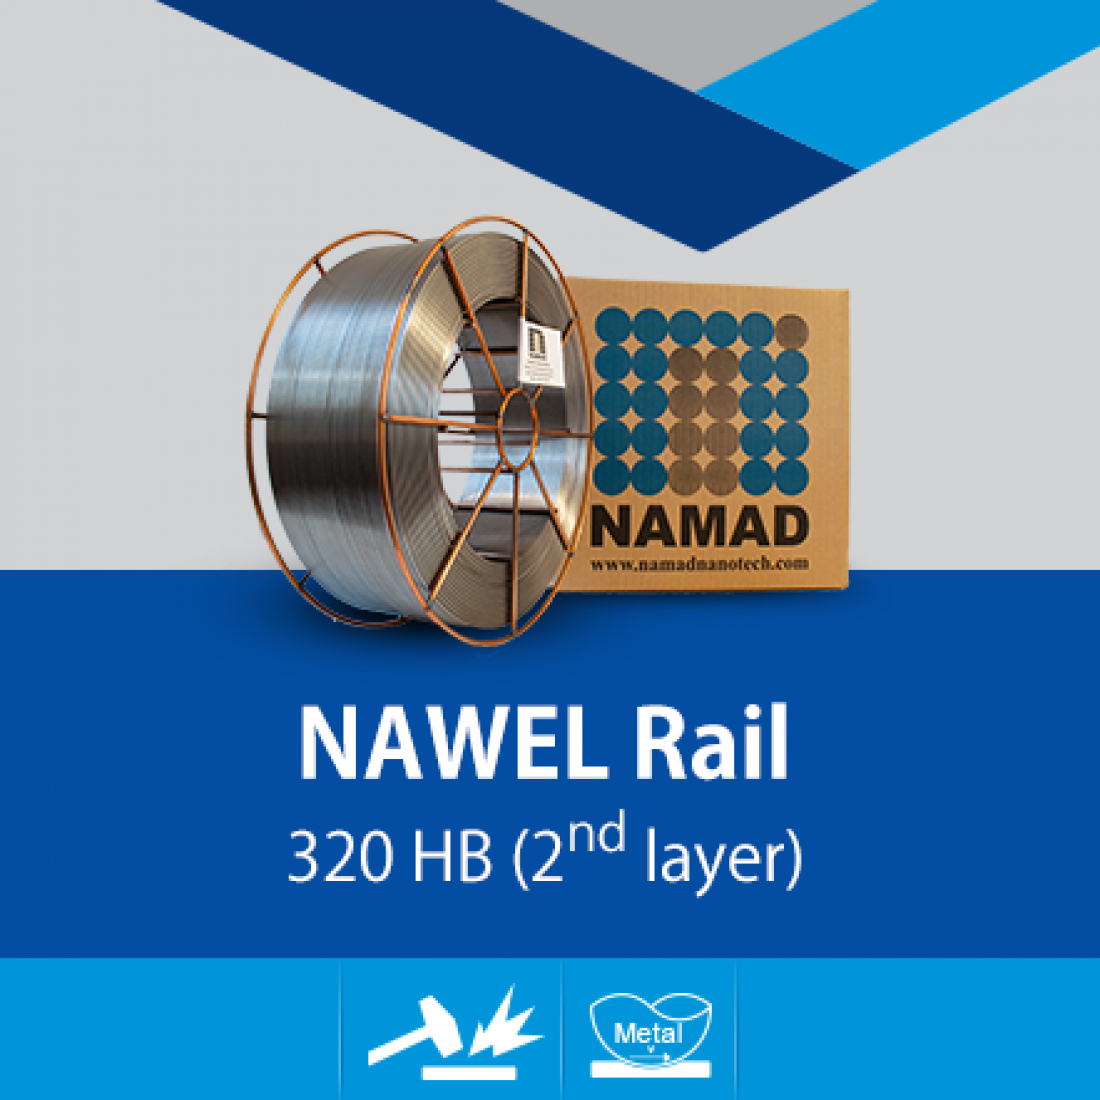 NAWEL RAIL